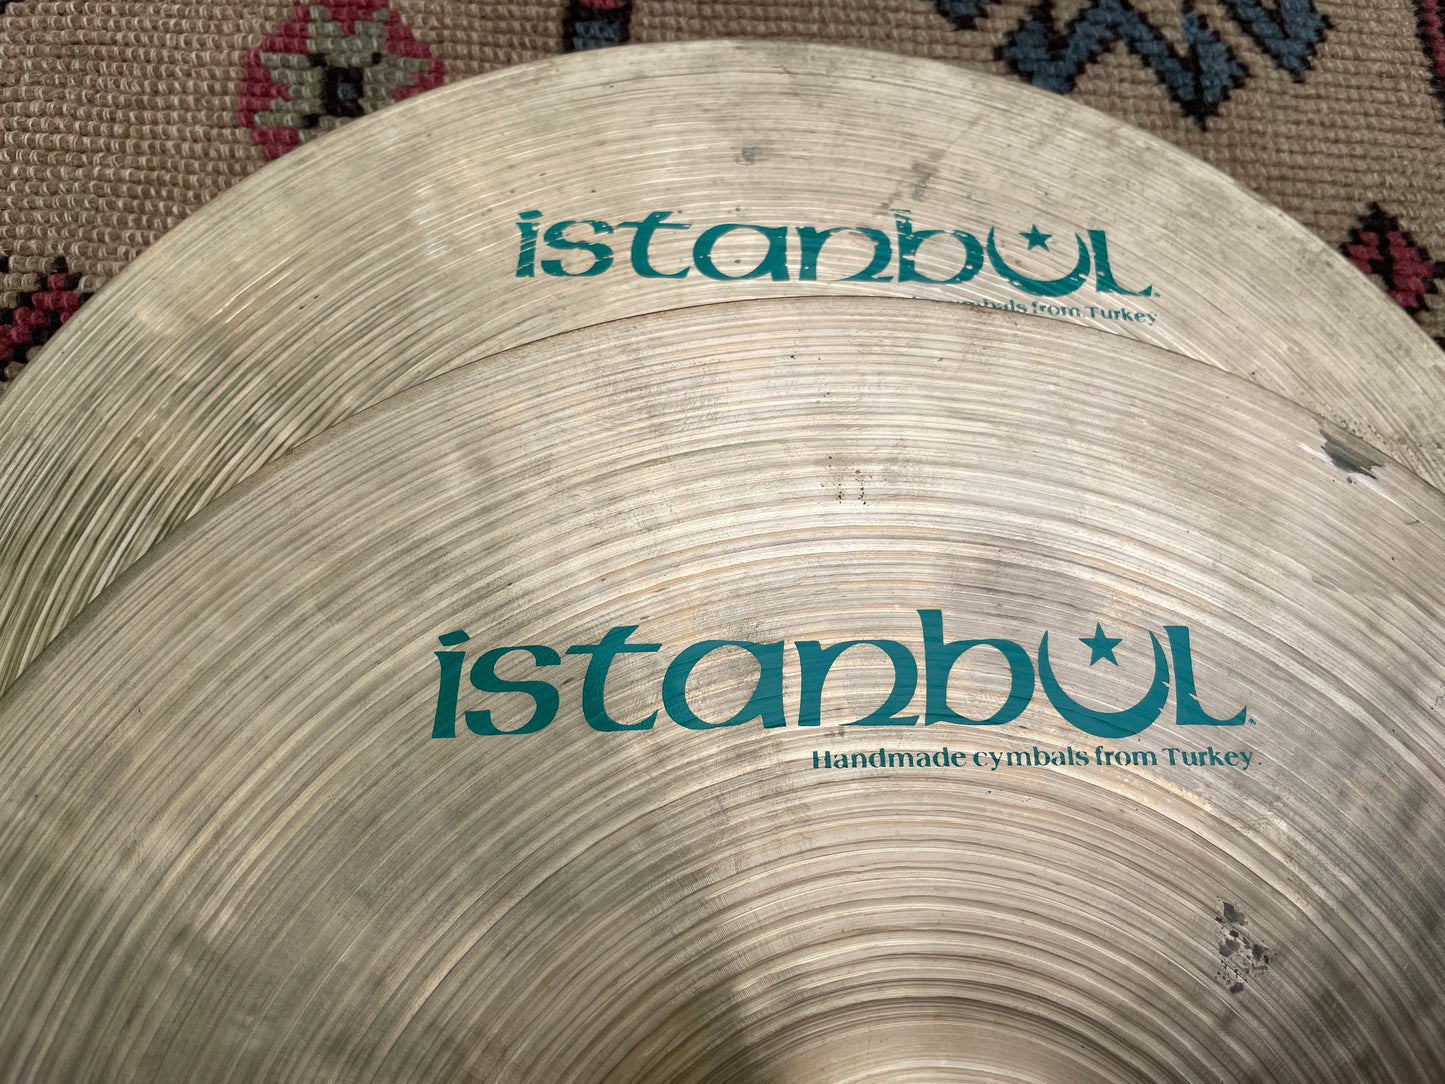 14" Istanbul Pre-Split Green Label Hi-Hat Cymbal Pair 1002g/1044g